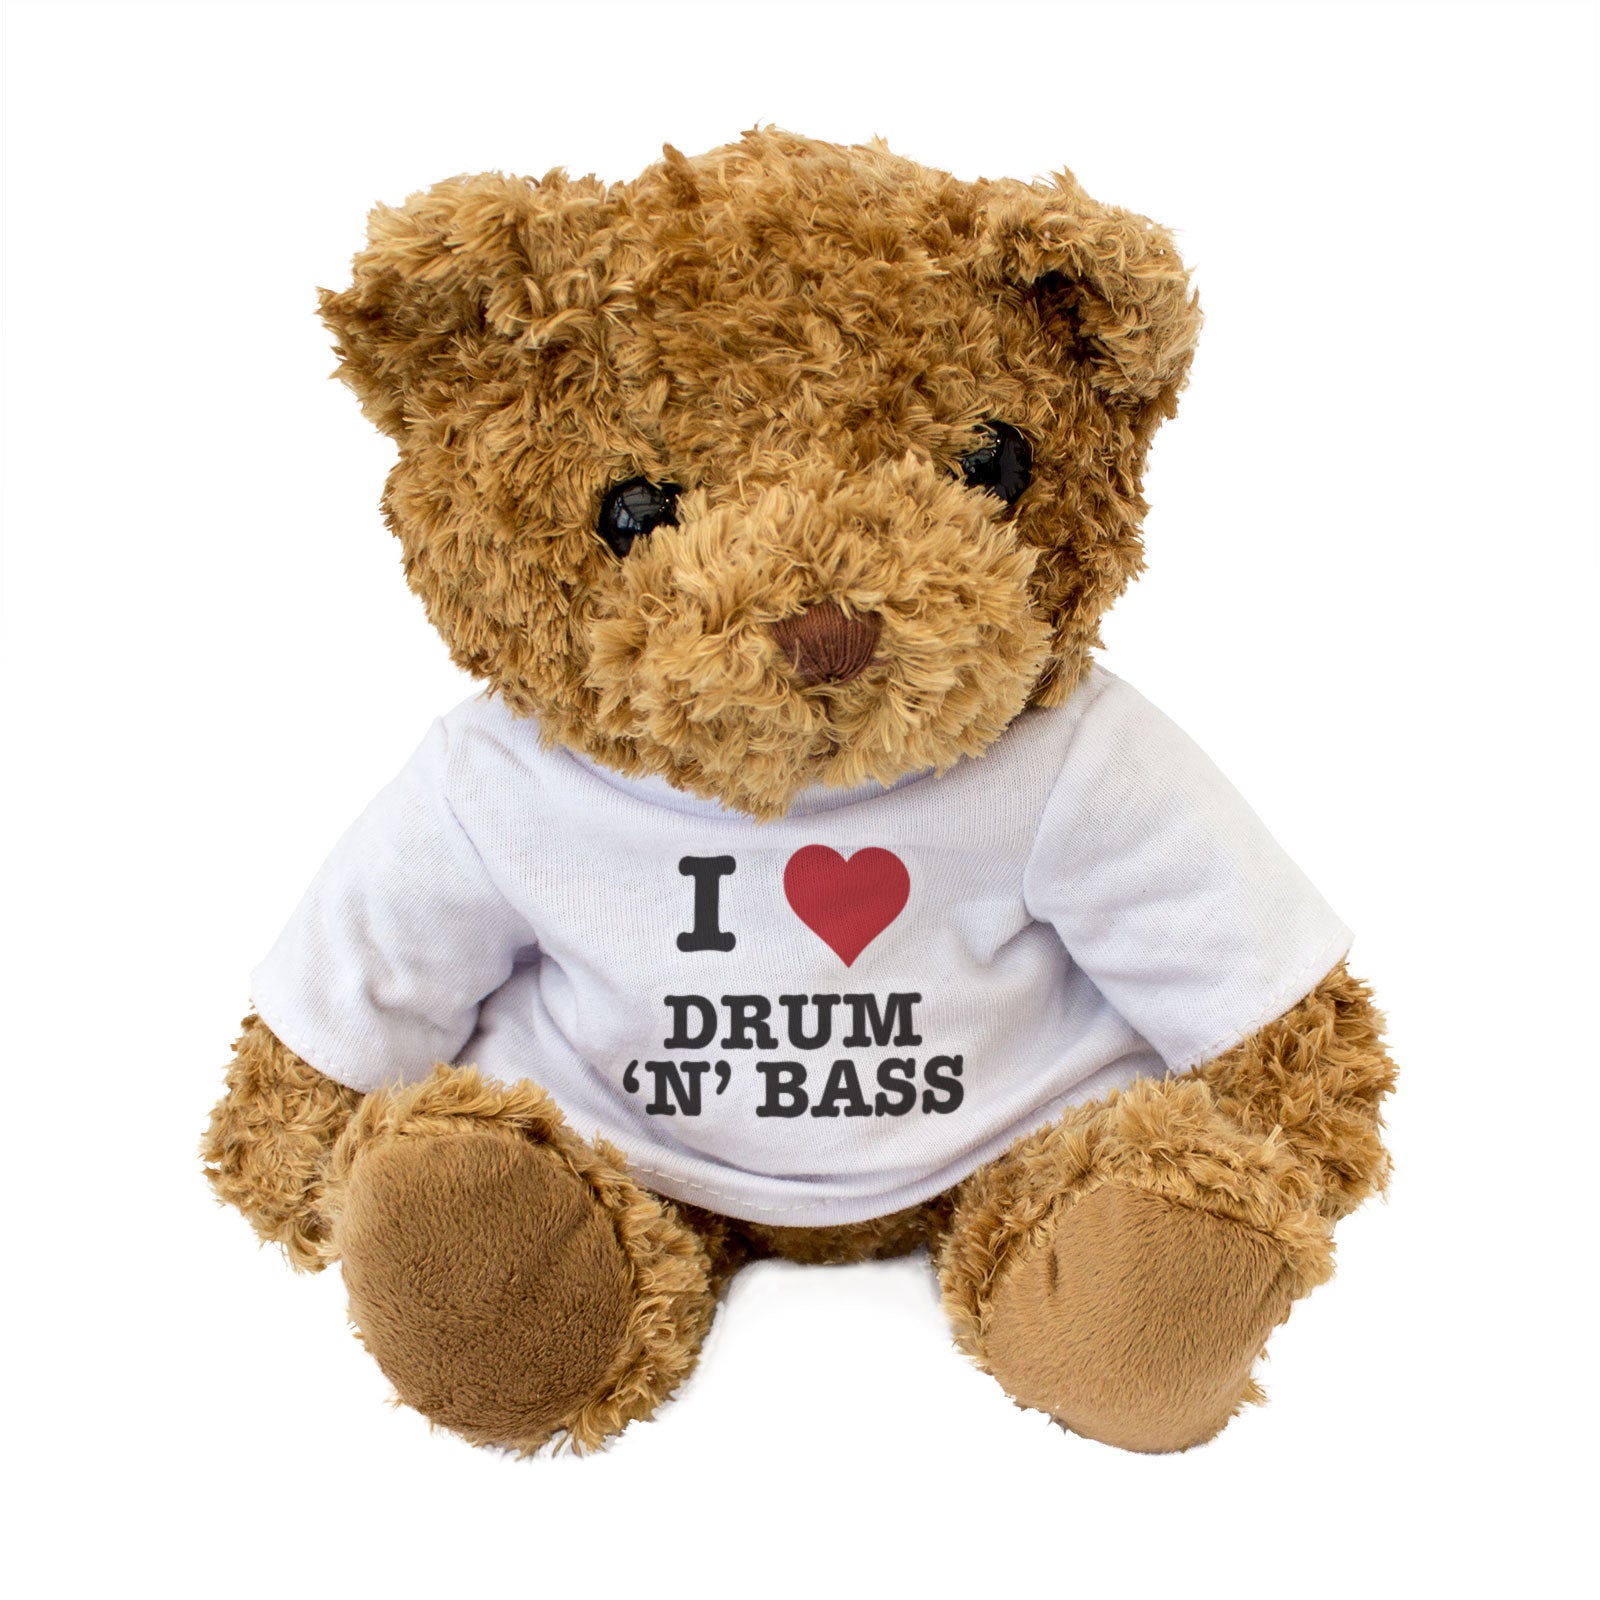 I Love Drum And Bass - Teddy Bear